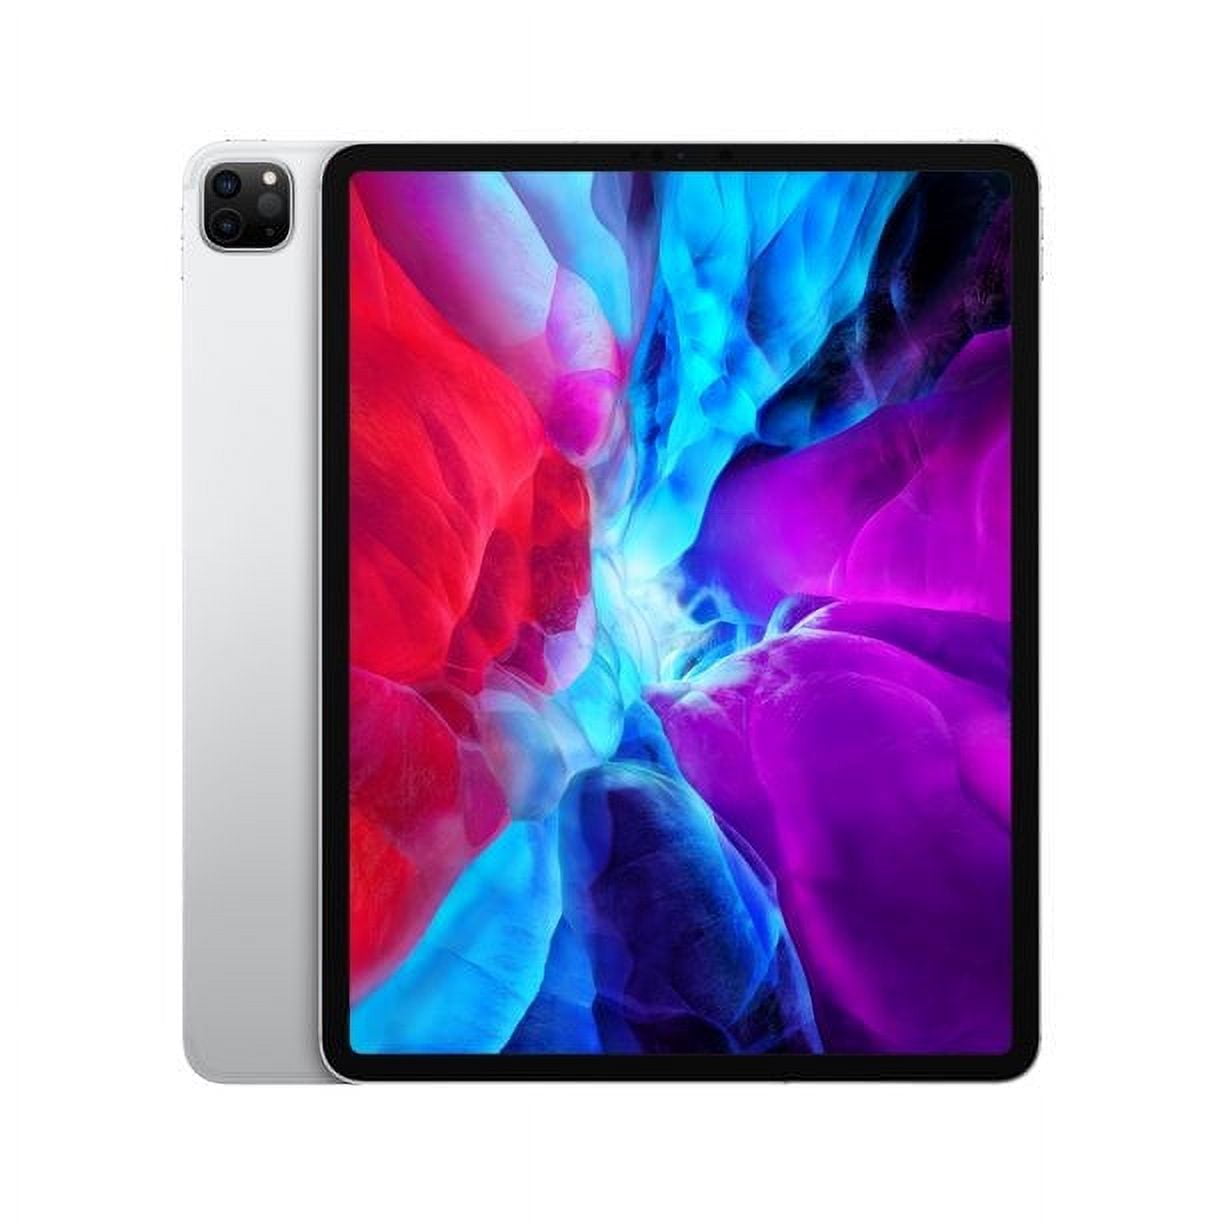 Restored Apple iPad Pro 12.9-inch 4th Gen (2020) Silver 256GB WiFi + Cellular (Refurbished)